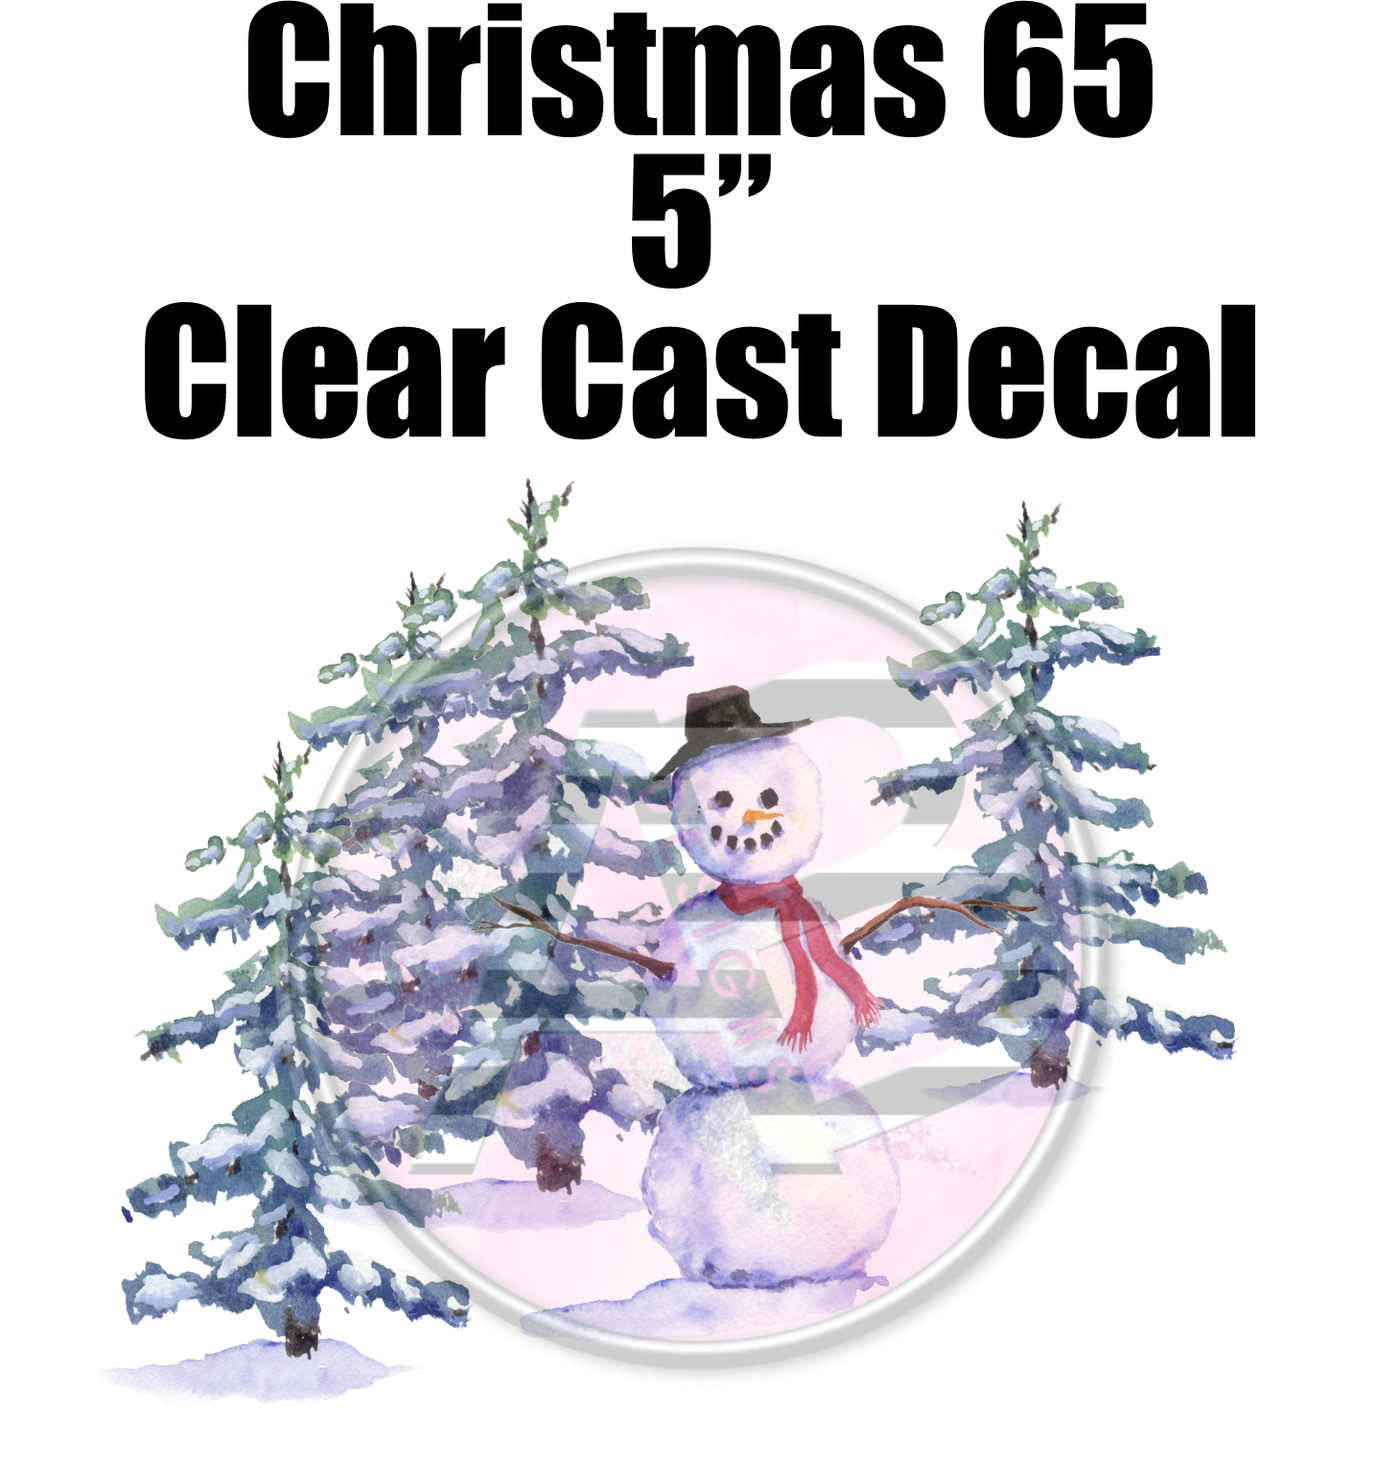 Christmas 65 - Clear Cast Decal